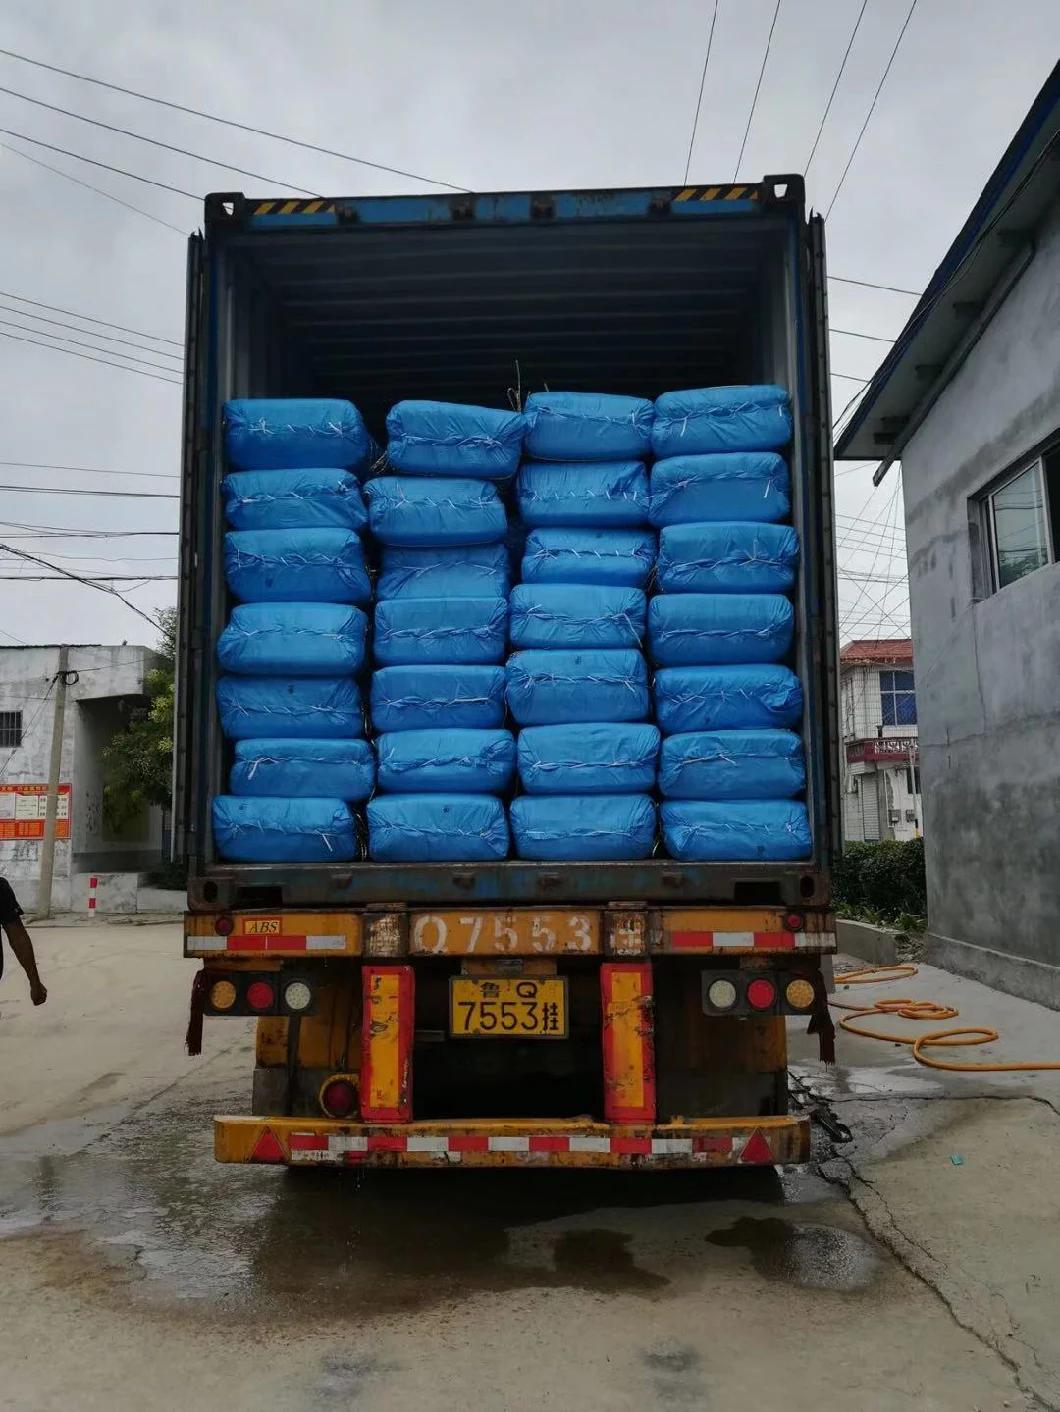 Wholesale 25kg 50kg Empty Woven PP Polypropylene Bag PP Sacks for Flour, Rice, Corn, Feed